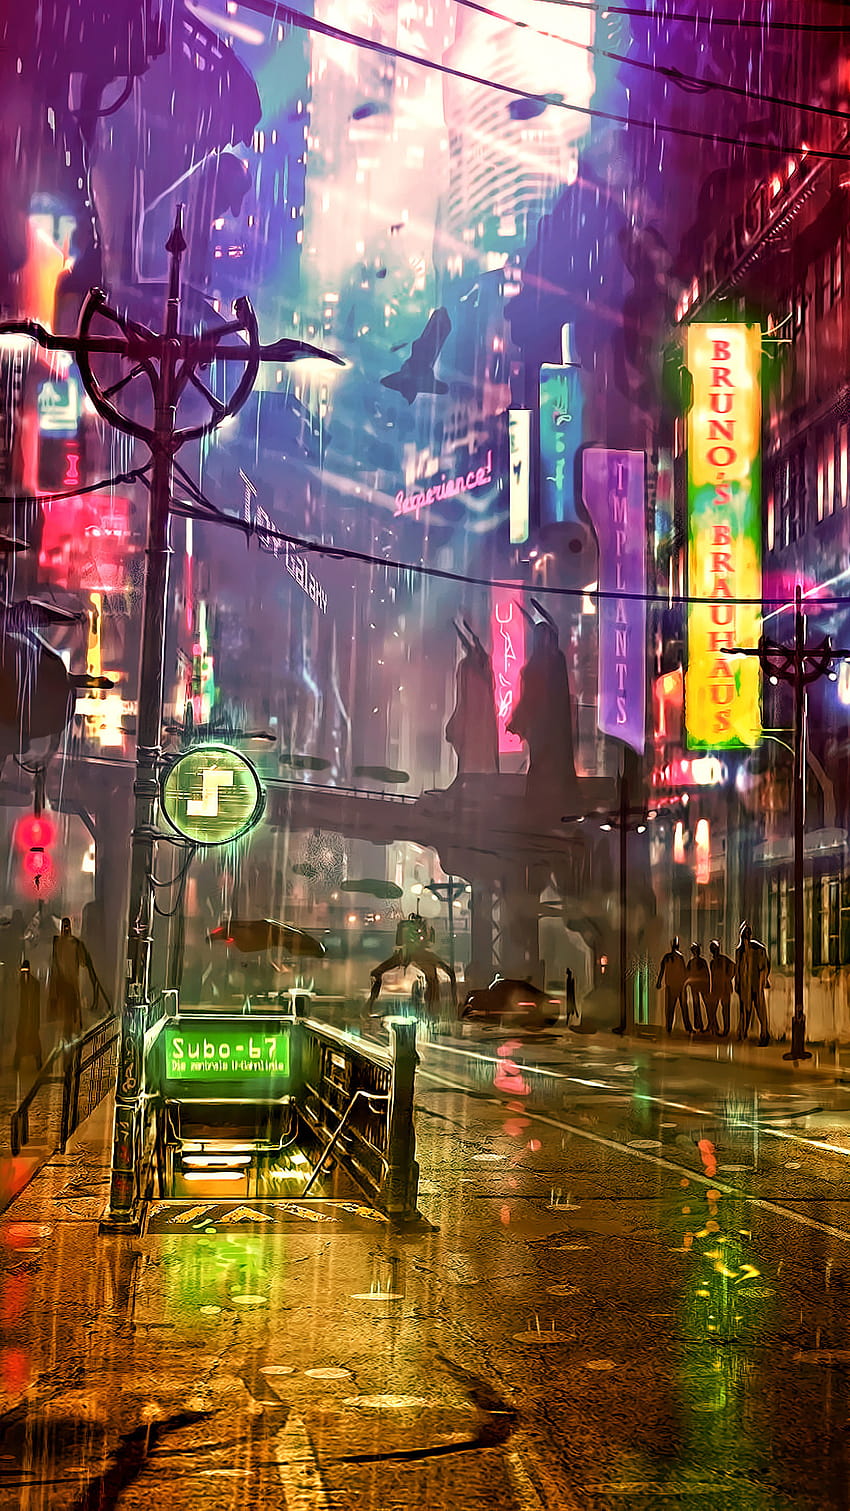 1080x1920 Futuristic City Cyberpunk Neon Street Digital Art Iphone 7,6s,6 Plus, Pixel xl ,One Plus 3,3t,5 , Backgrounds, and, pixel art phone HD phone wallpaper